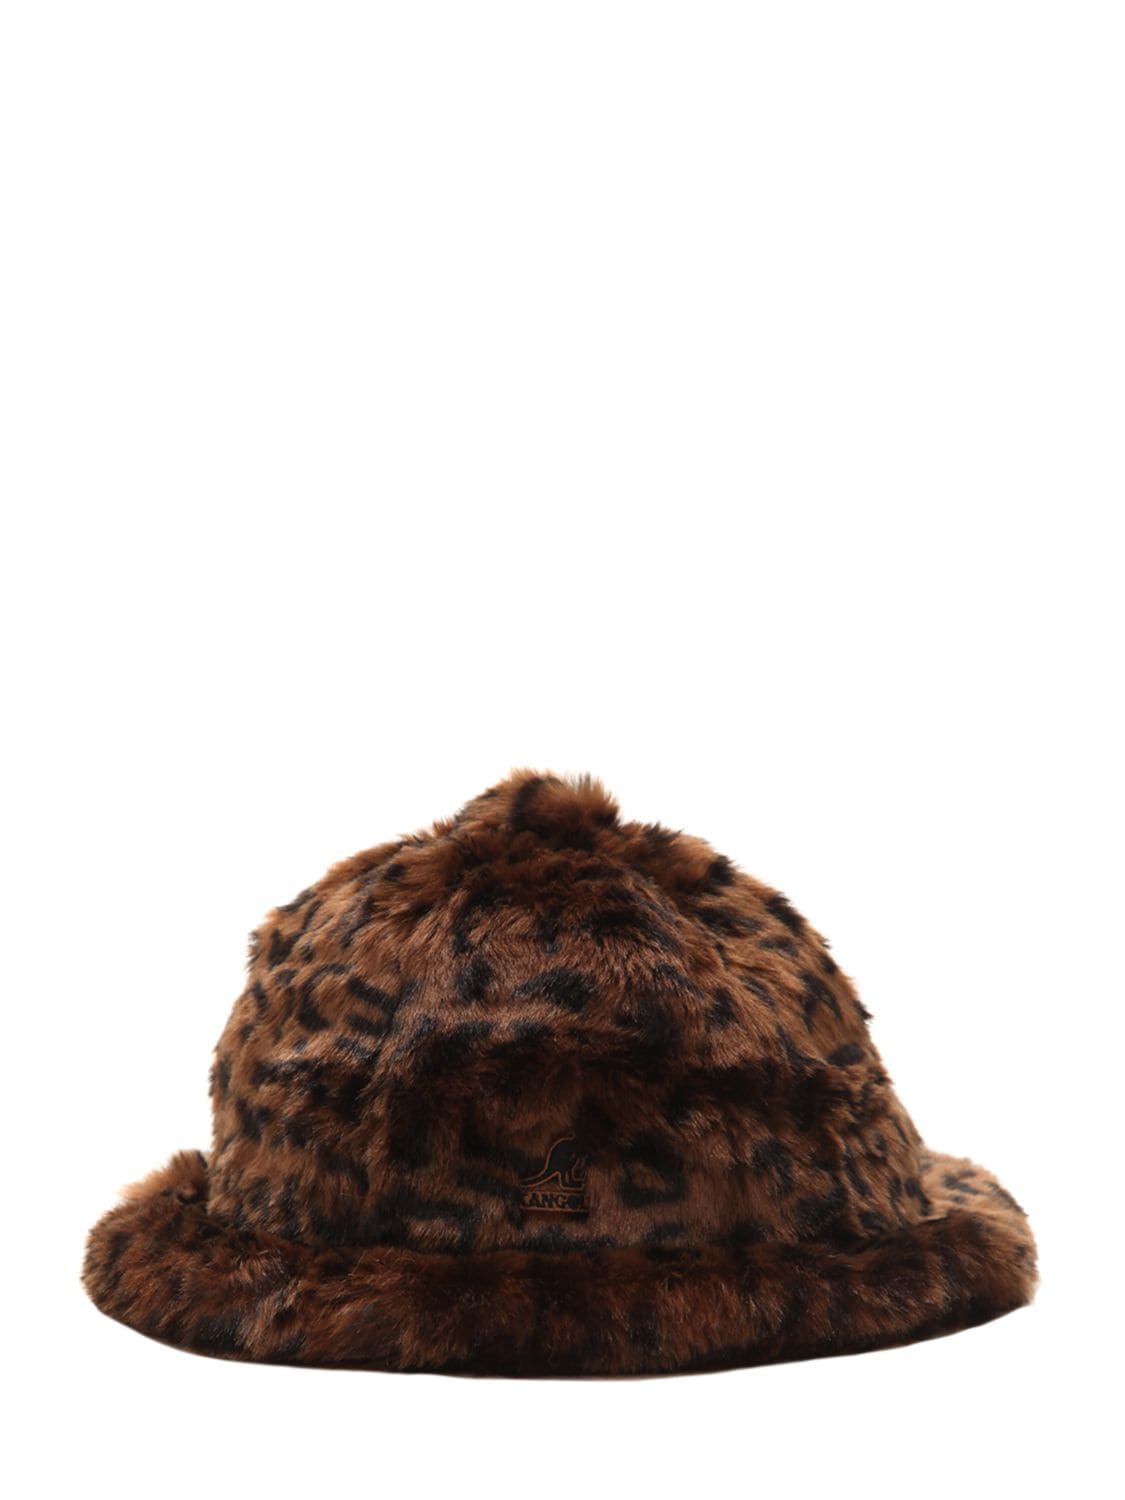 KANGOL 豹纹印花人造皮草帽子,72IWP8010-TEVPUEFSRA2